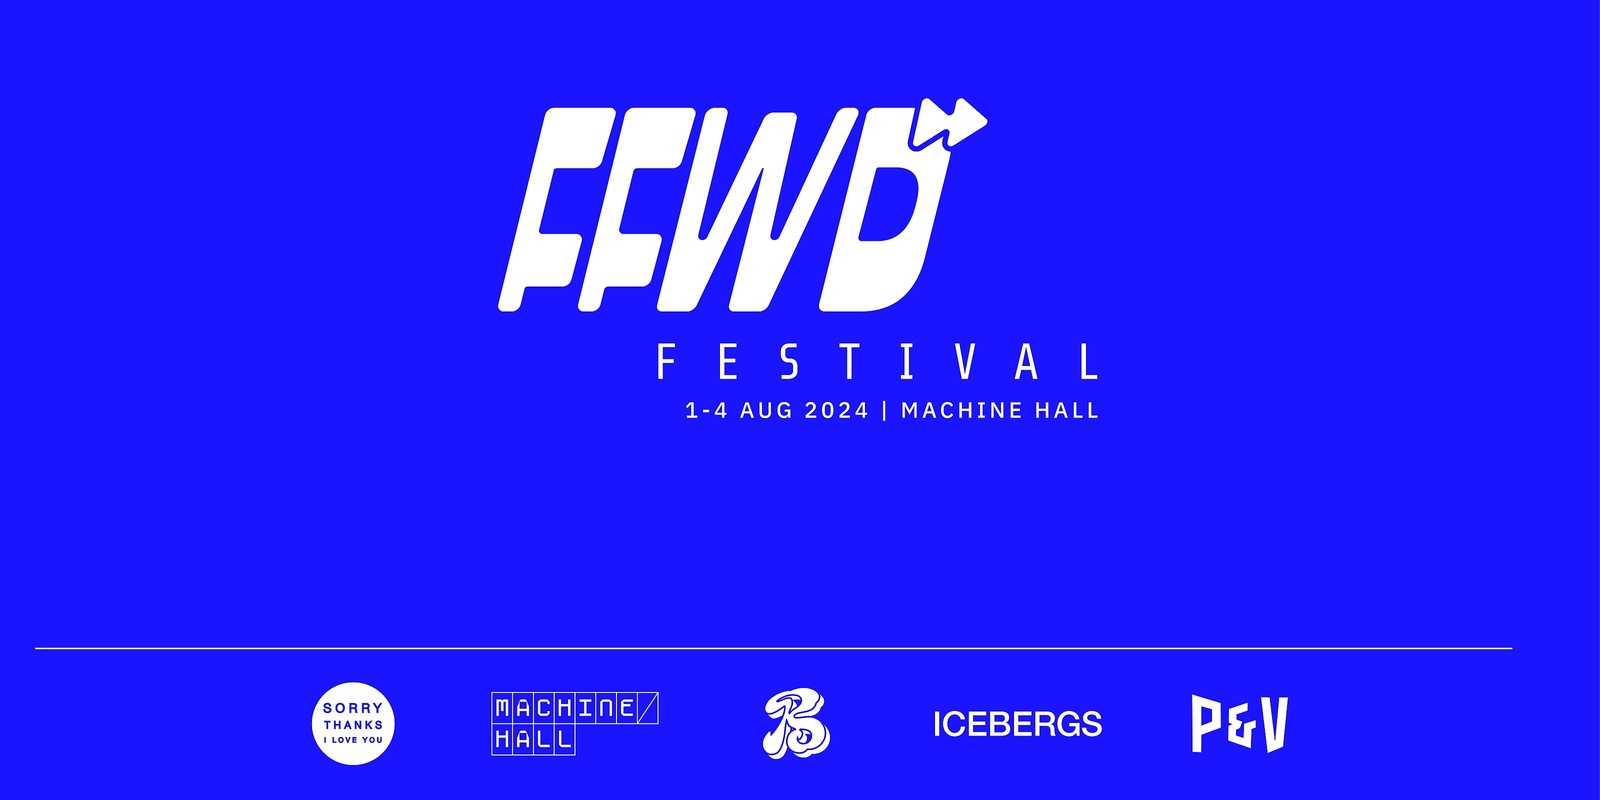 Banner image for FFWD Festival